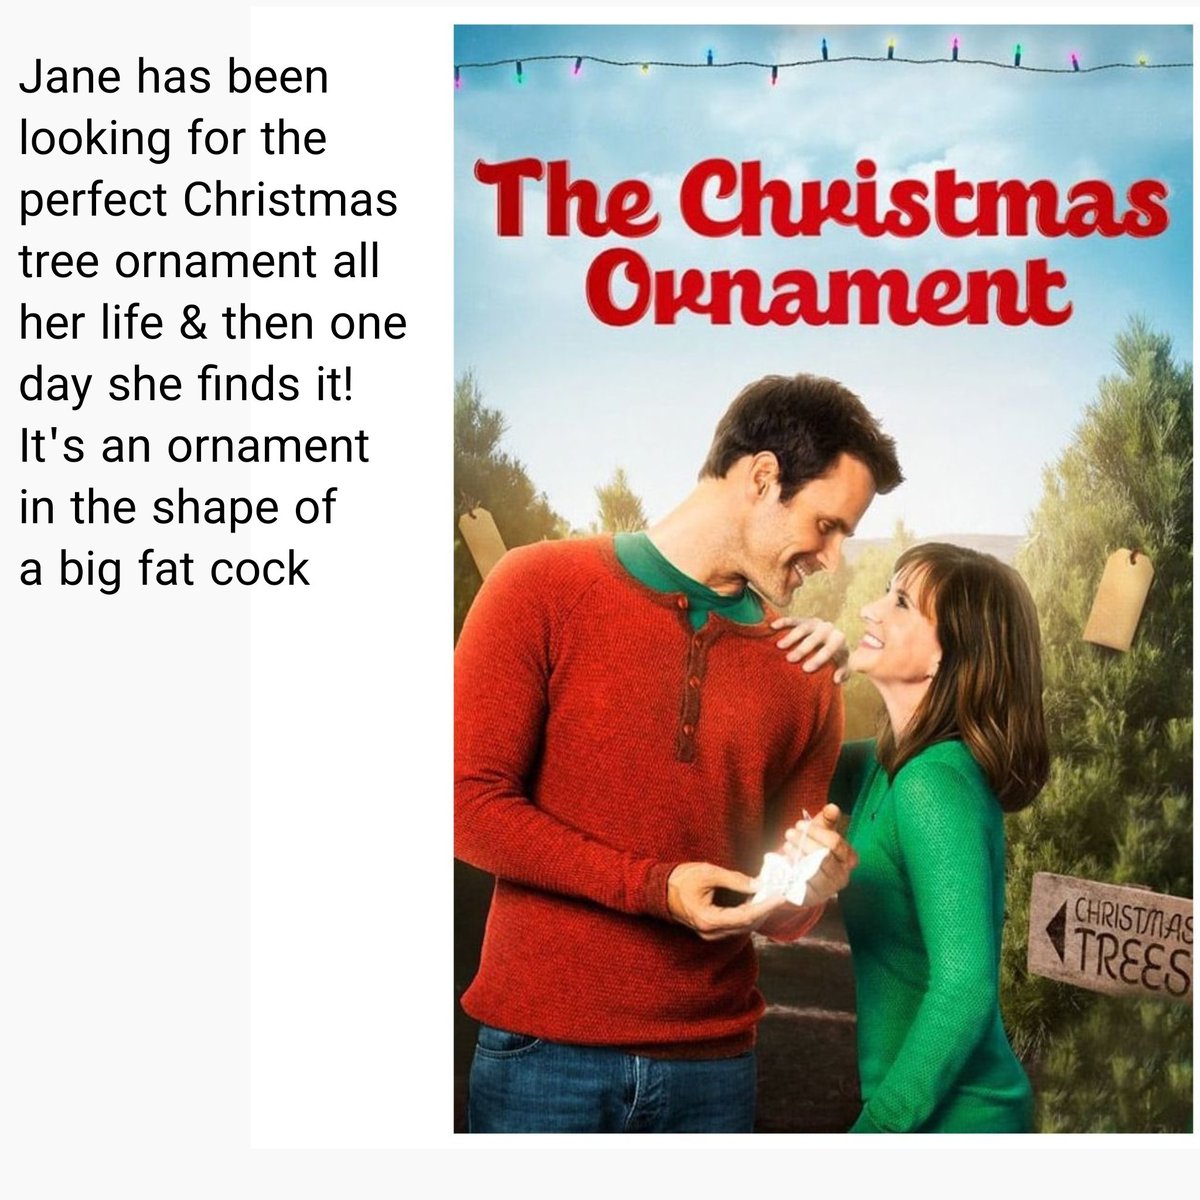 My favourite Hallmark channel Christmas movies